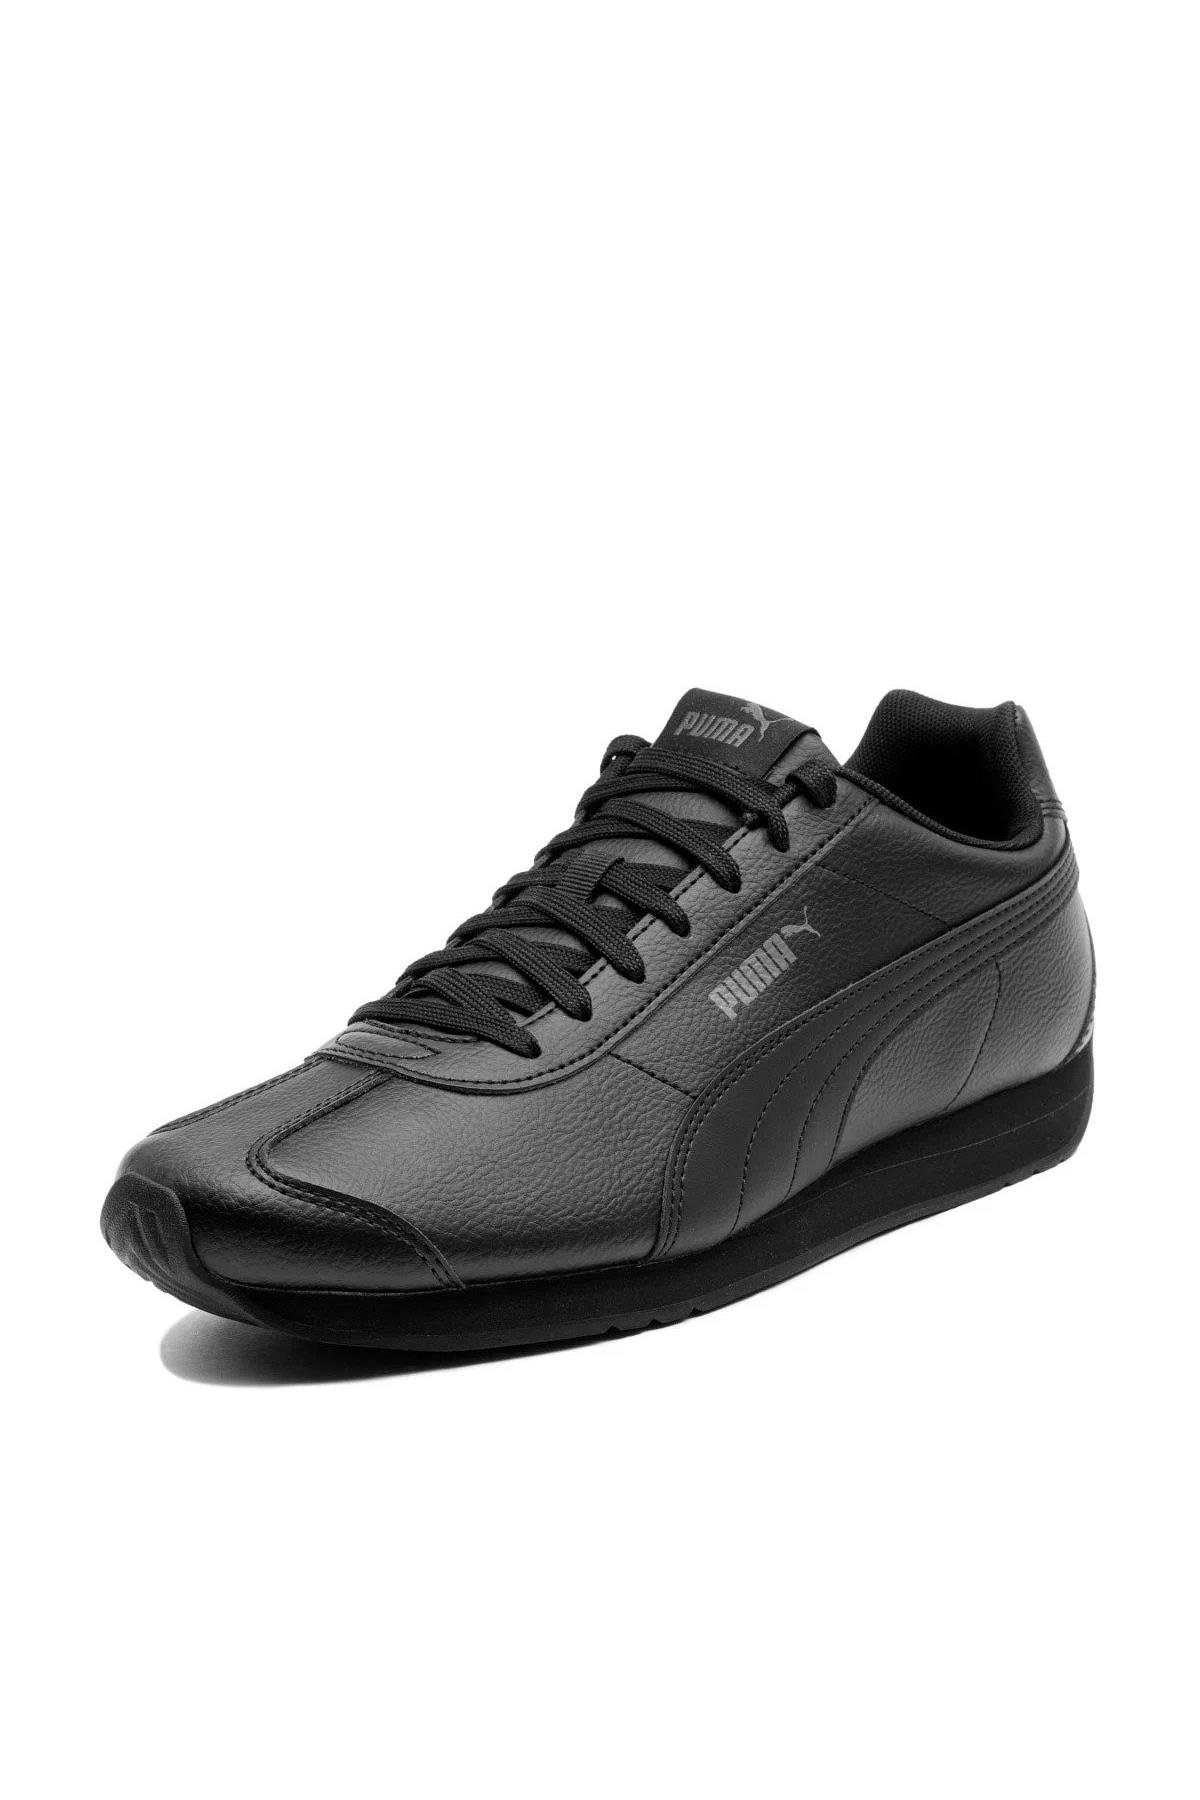 Puma 383037 01 Turin 3 Spor Ayakkabı SİYAH